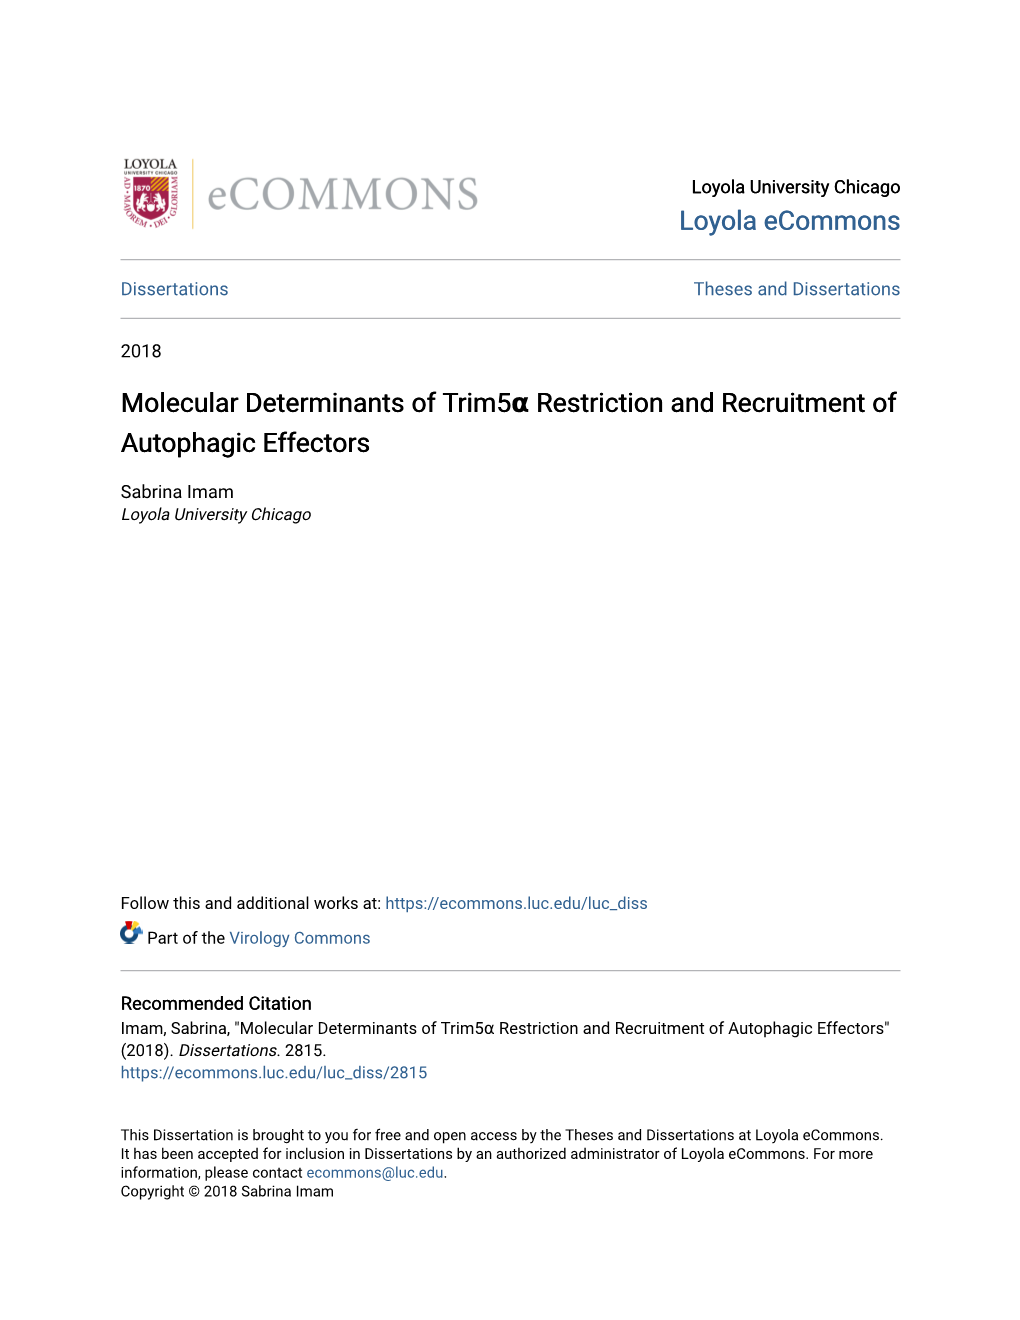 Molecular Determinants of Trim5α Restriction and Recruitment of Autophagic Effectors